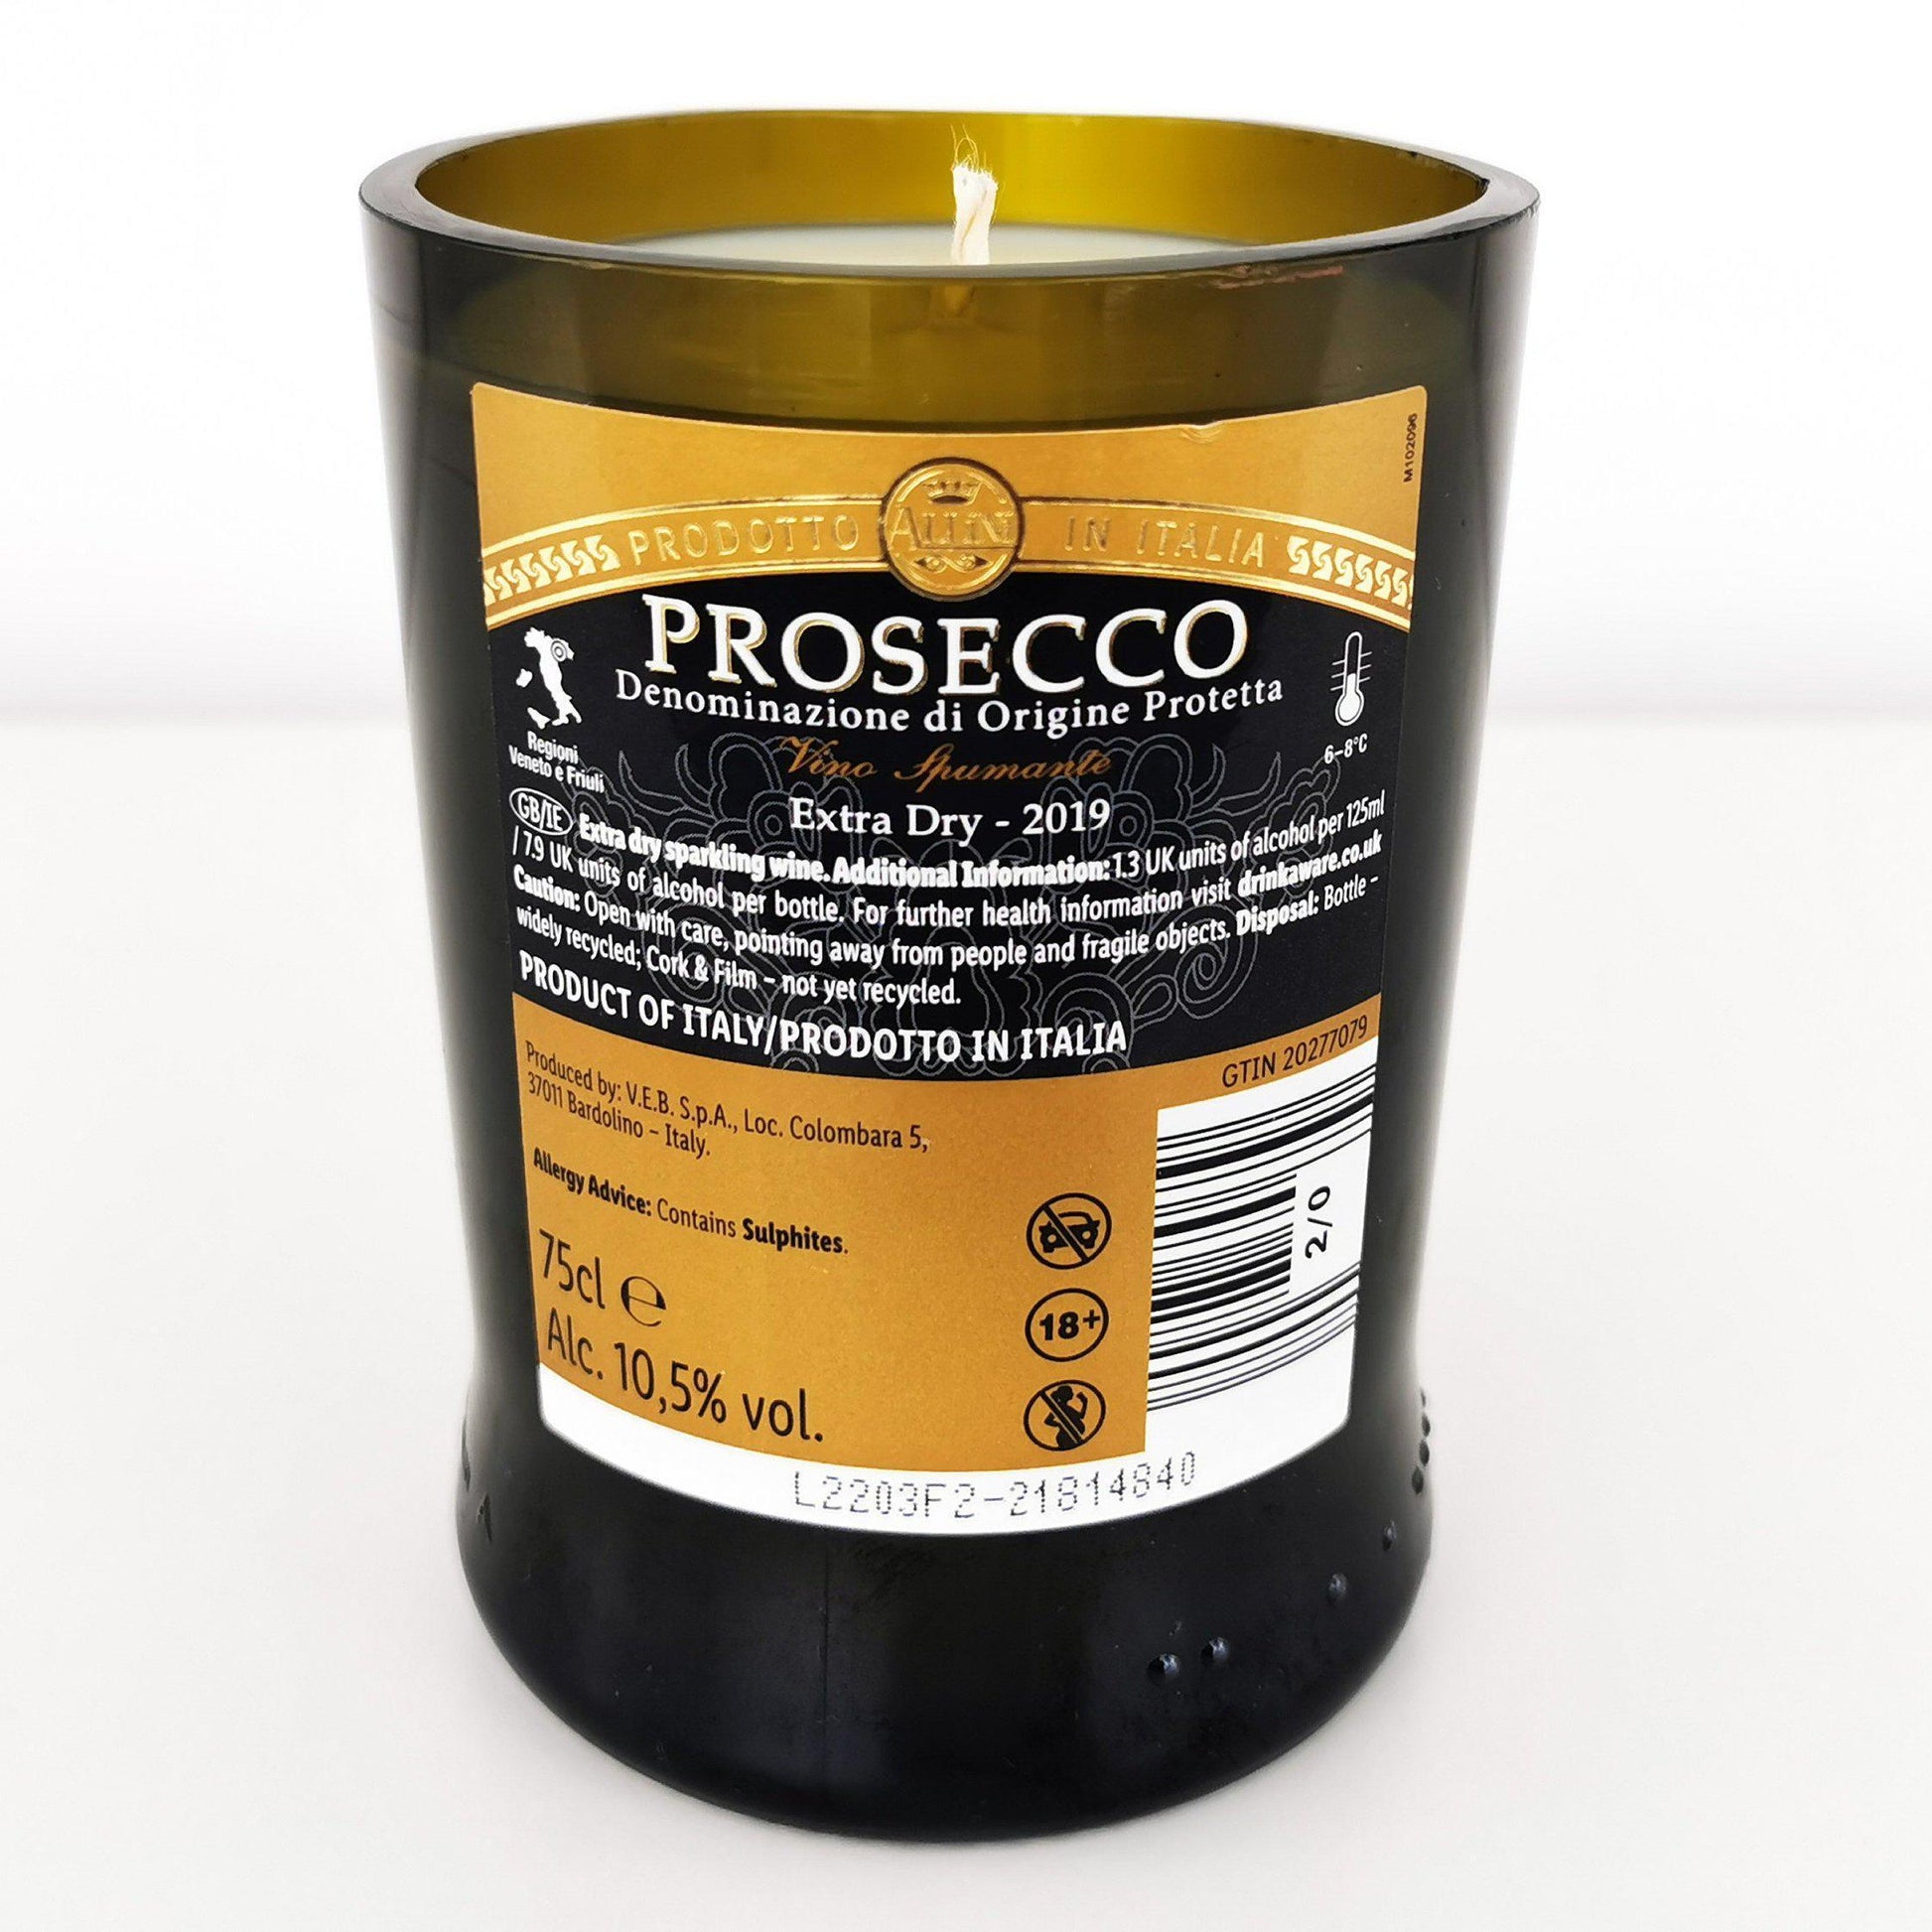 Allini Prosecco Spumante Bottle Candle Wine & Prosecco Bottle Candles Adhock Homeware